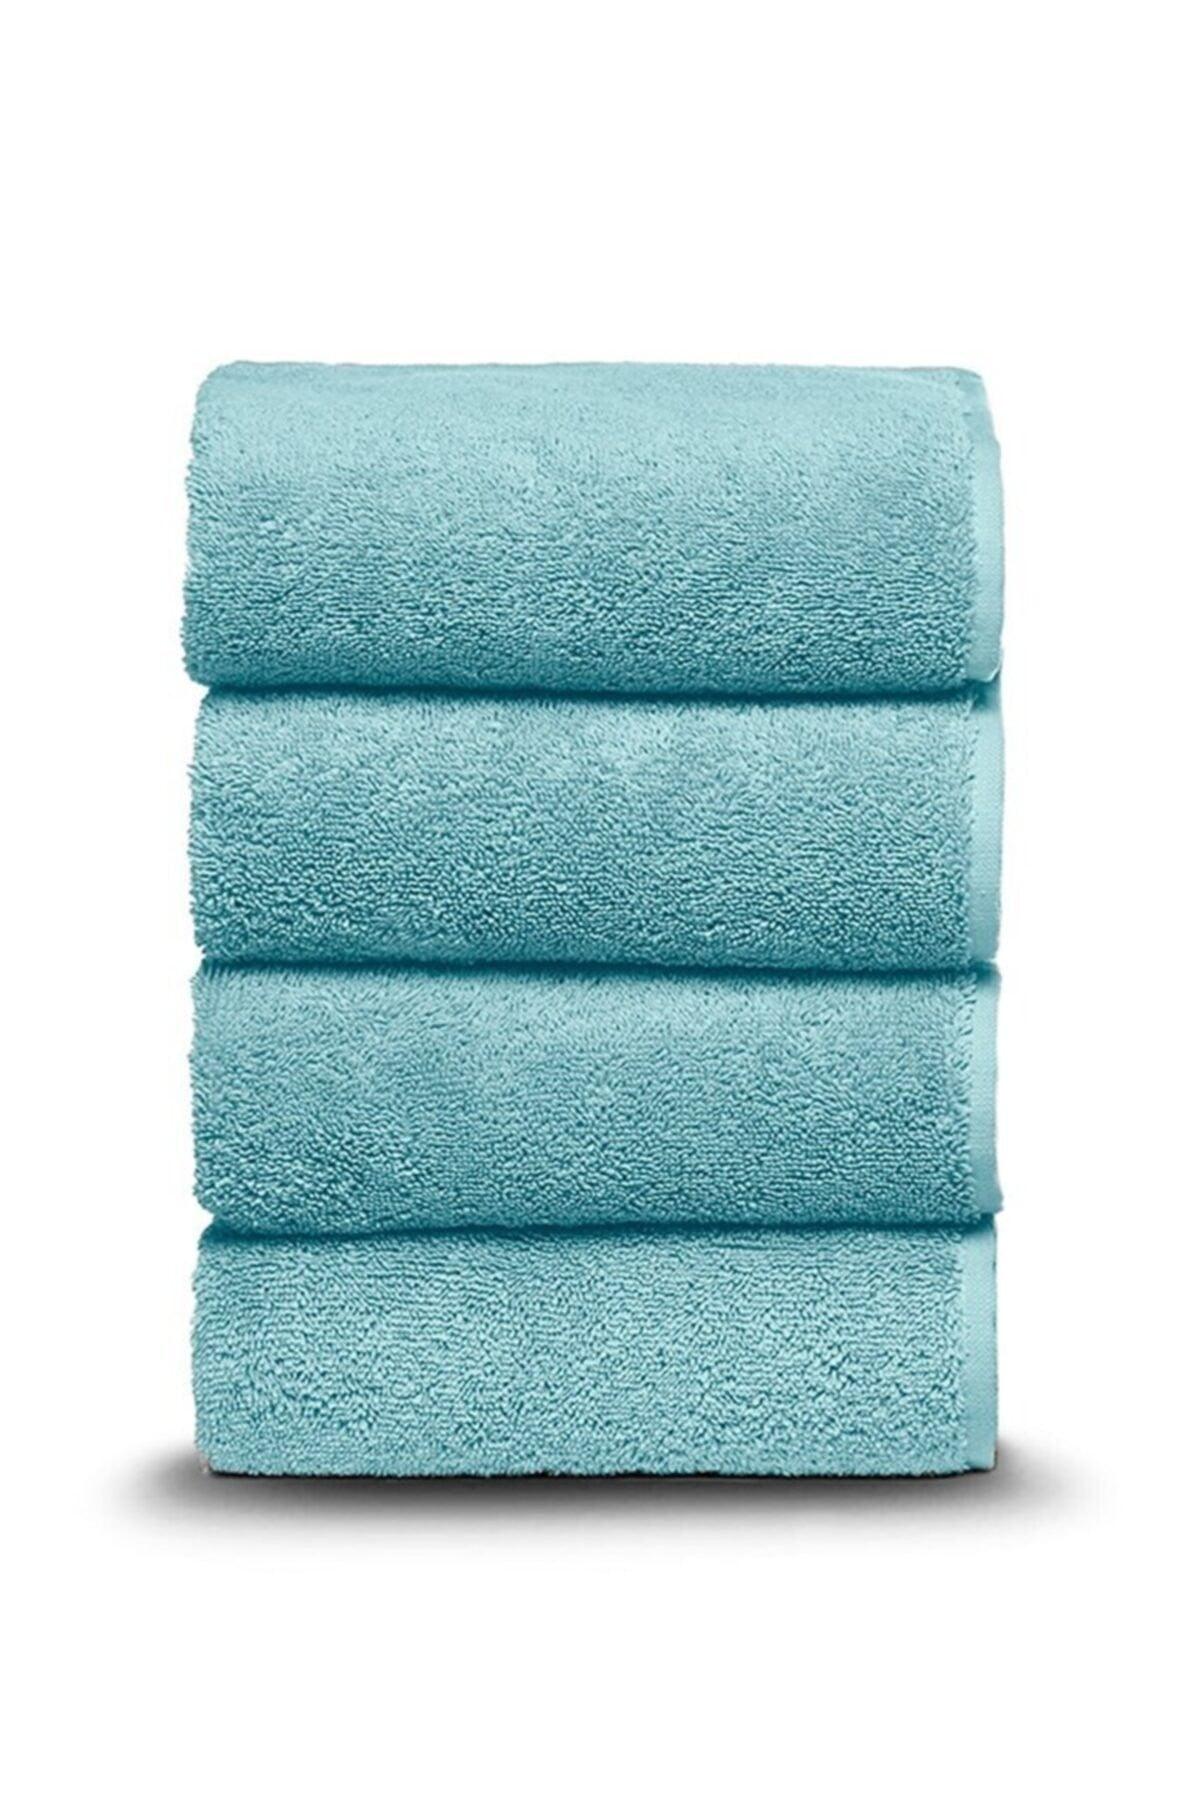 Bath Towel Set Hand Face Towel 4 Pieces Extra Soft Towel Set 50x90 Cm Turquoise - Swordslife